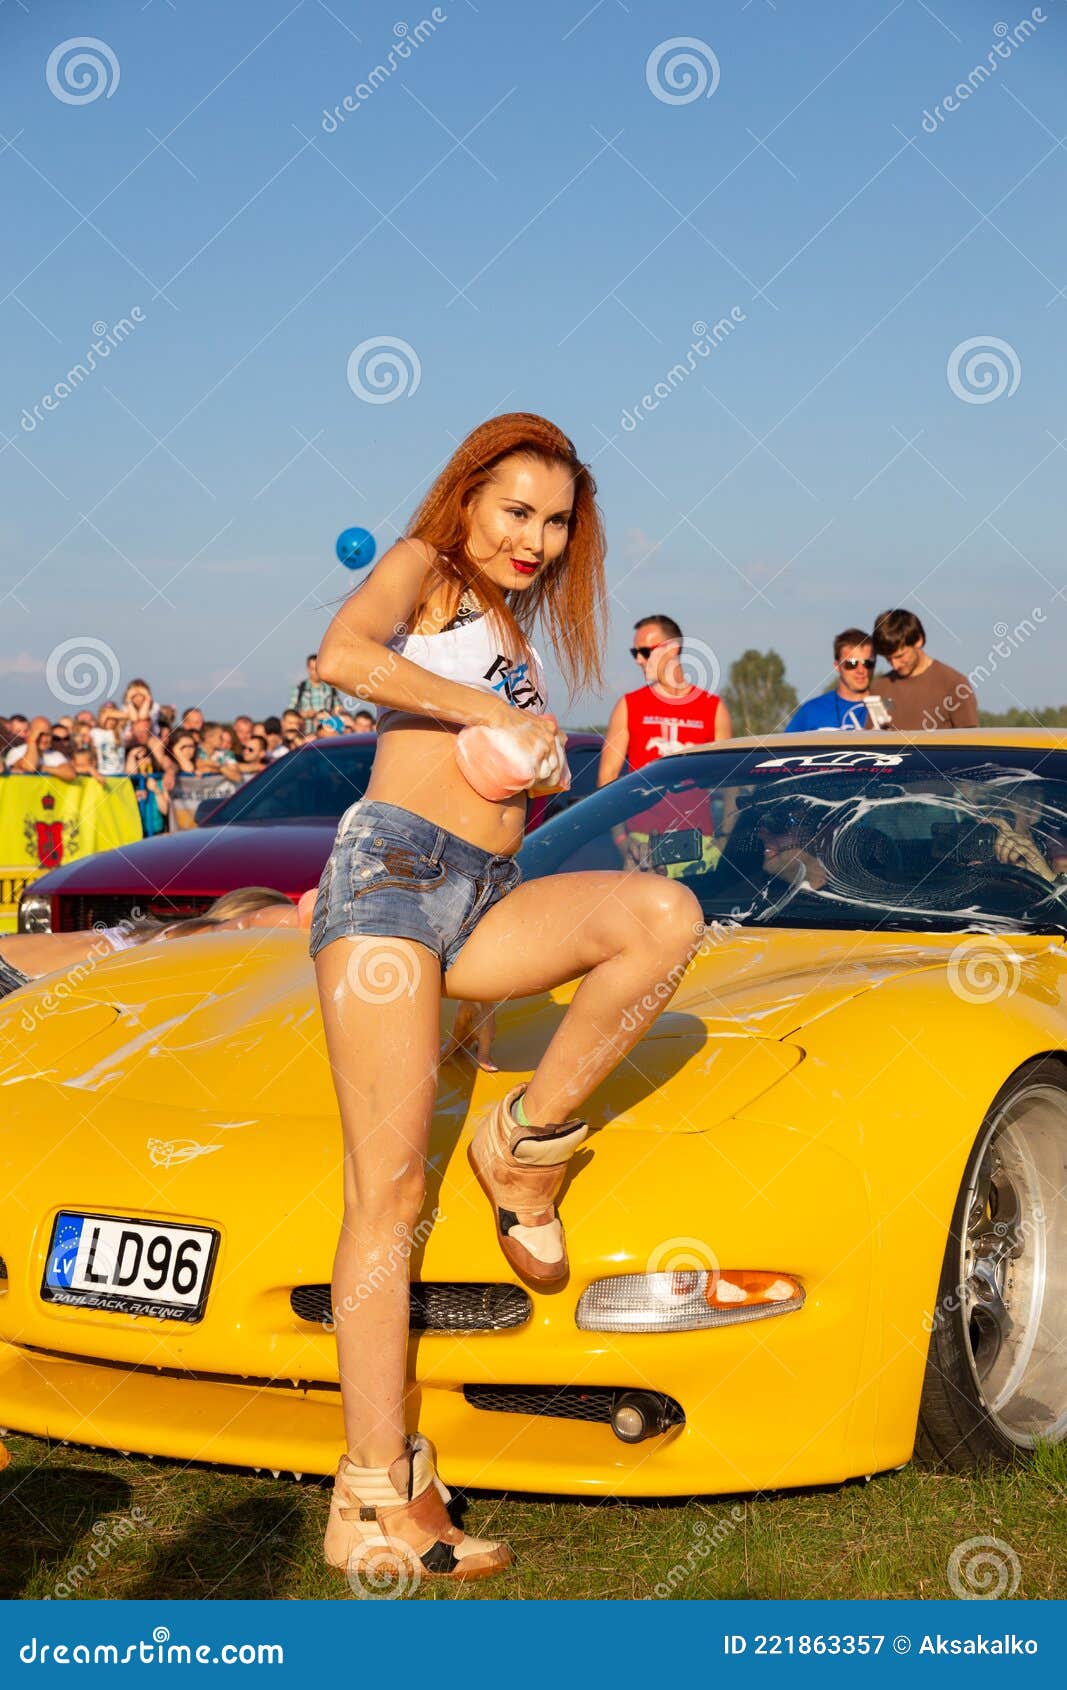 nake girls with race cars hot photo